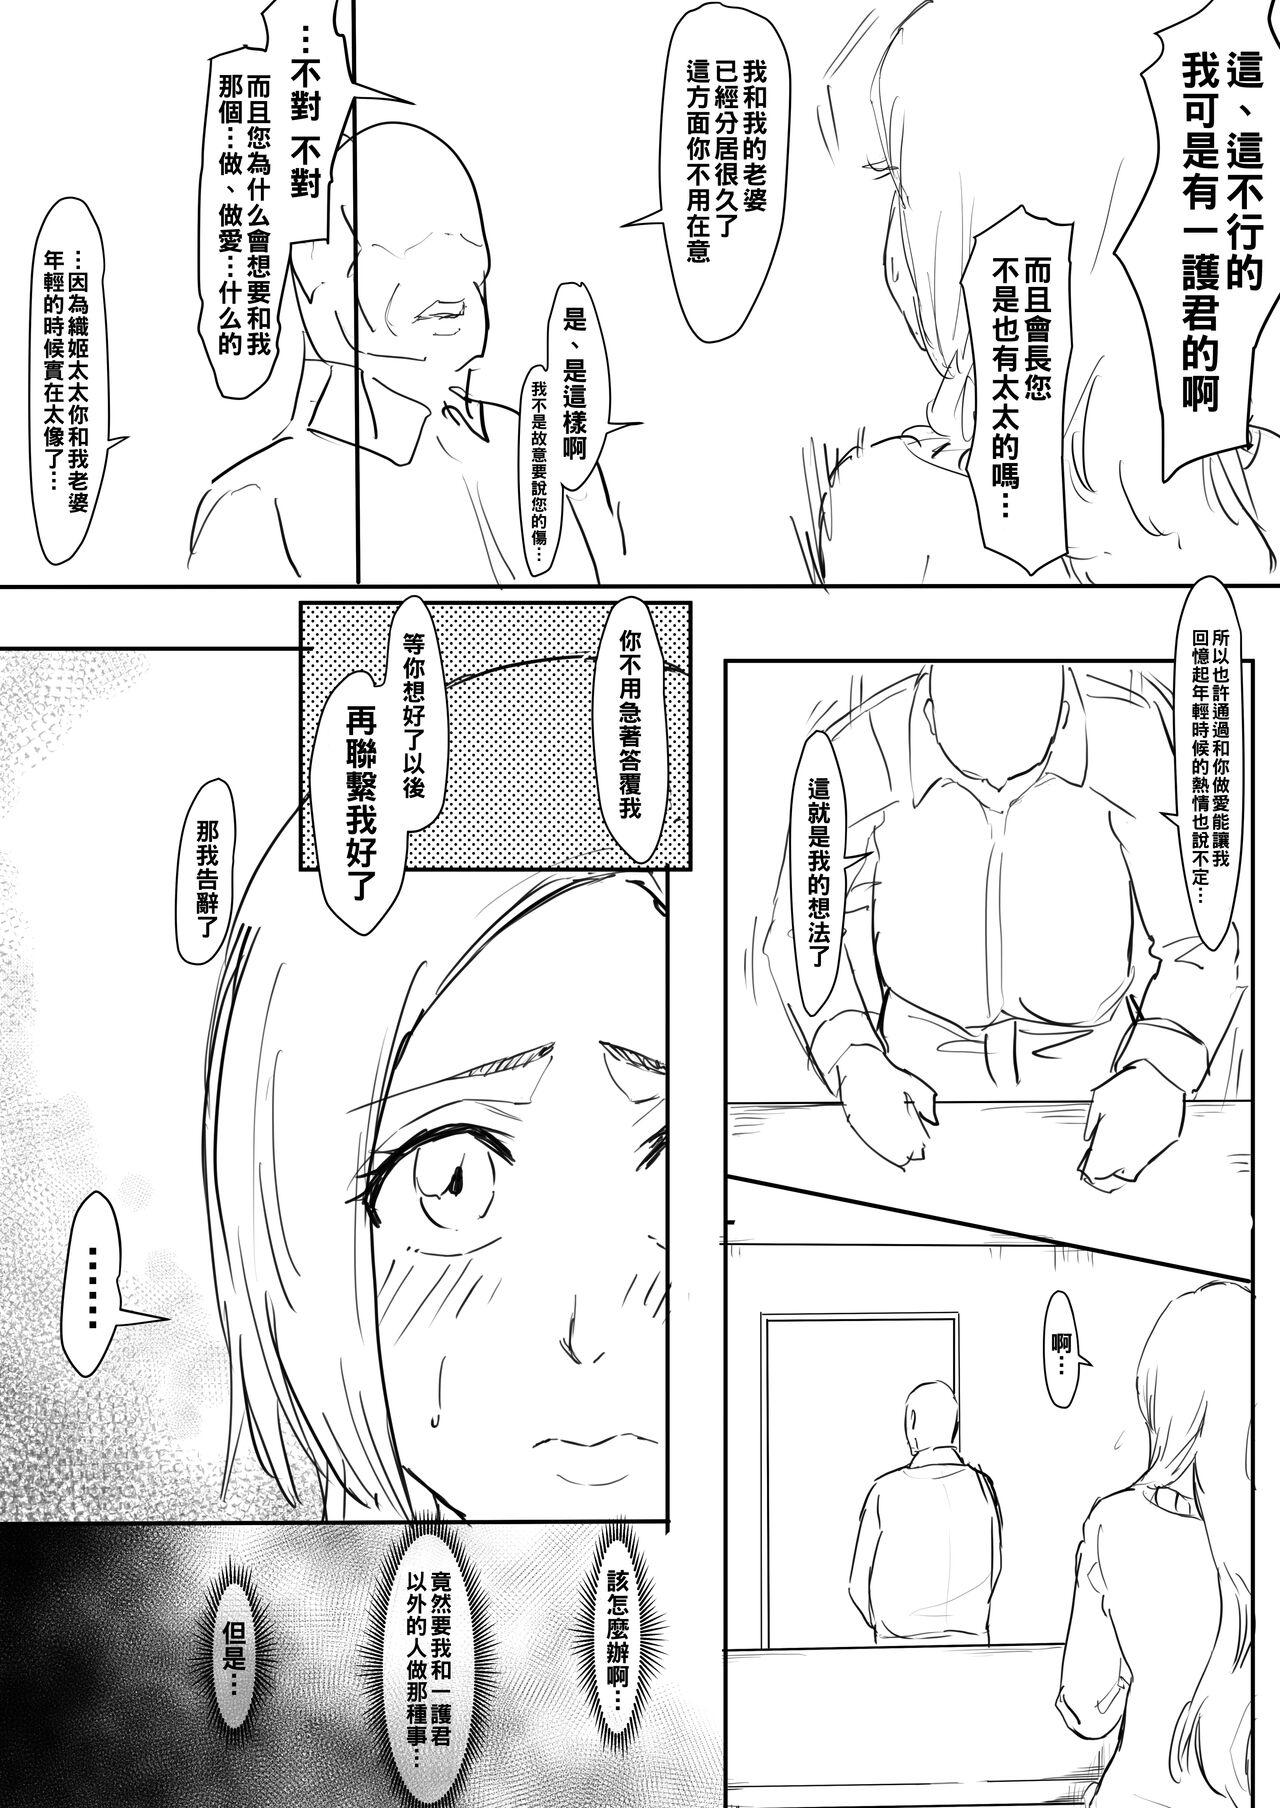 Pinoy Orihime Manga - Bleach Novia - Page 4